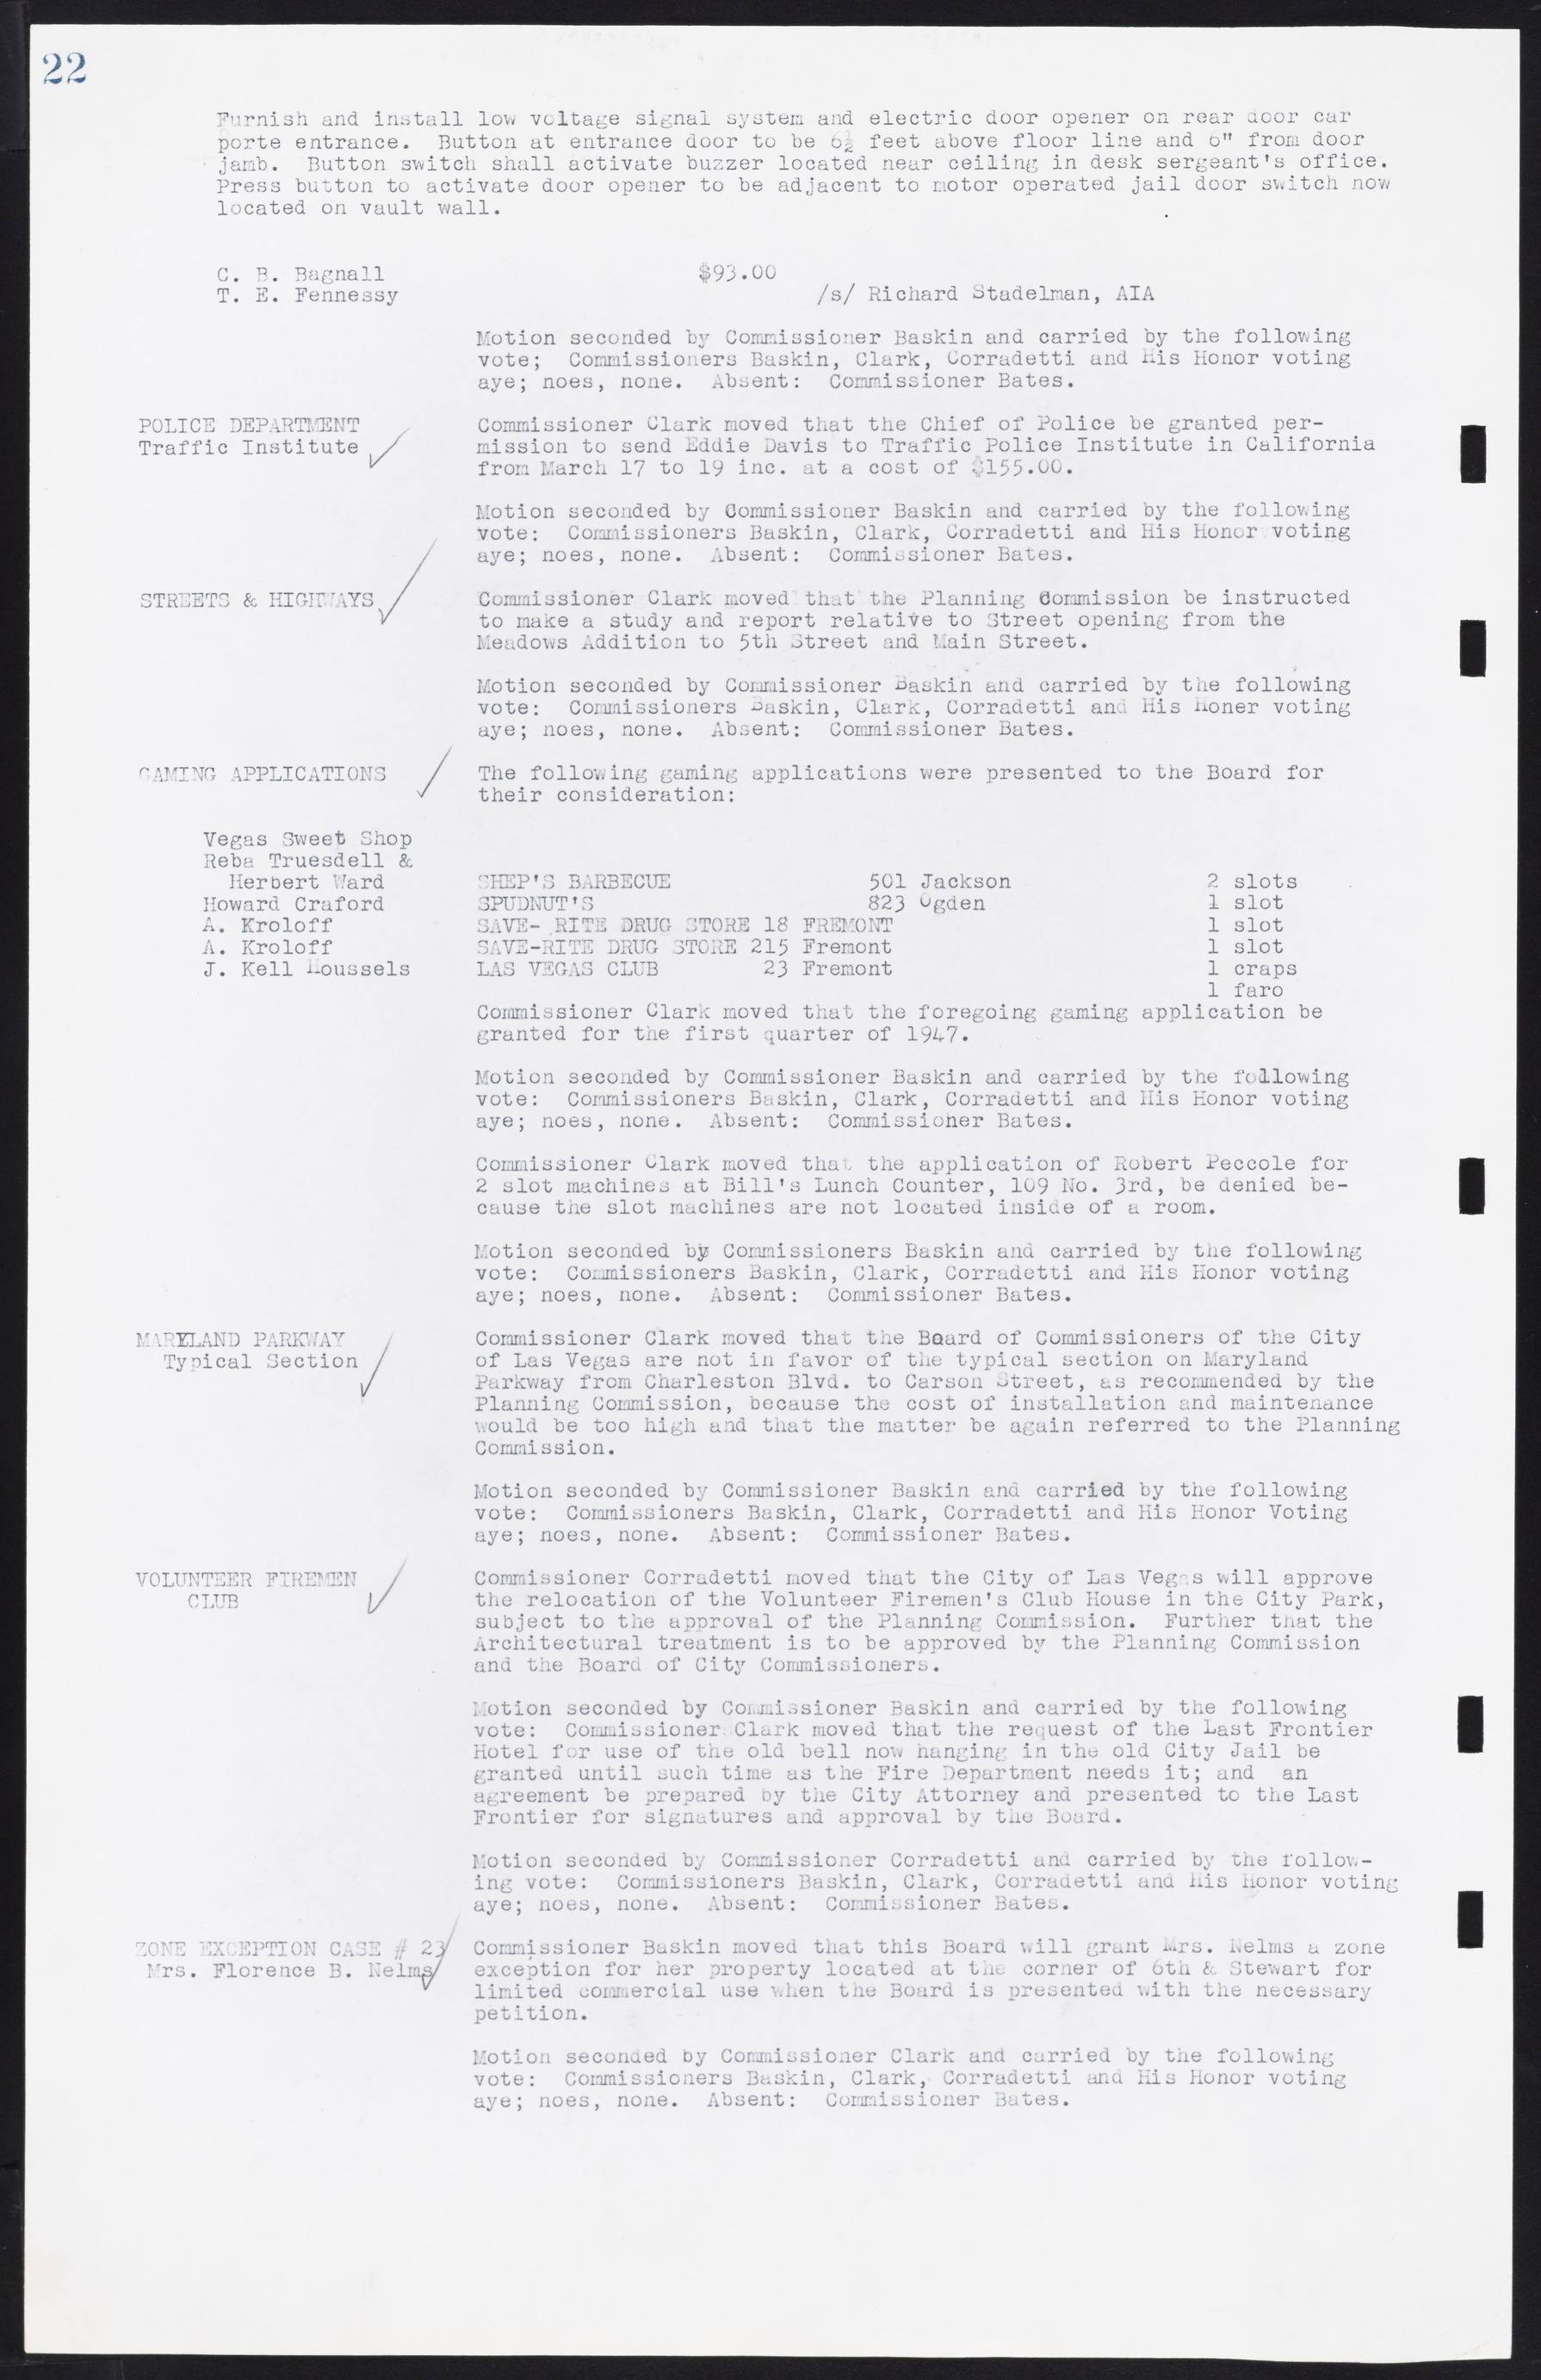 Las Vegas City Commission Minutes, January 7, 1947 to October 26, 1949, lvc000006-30